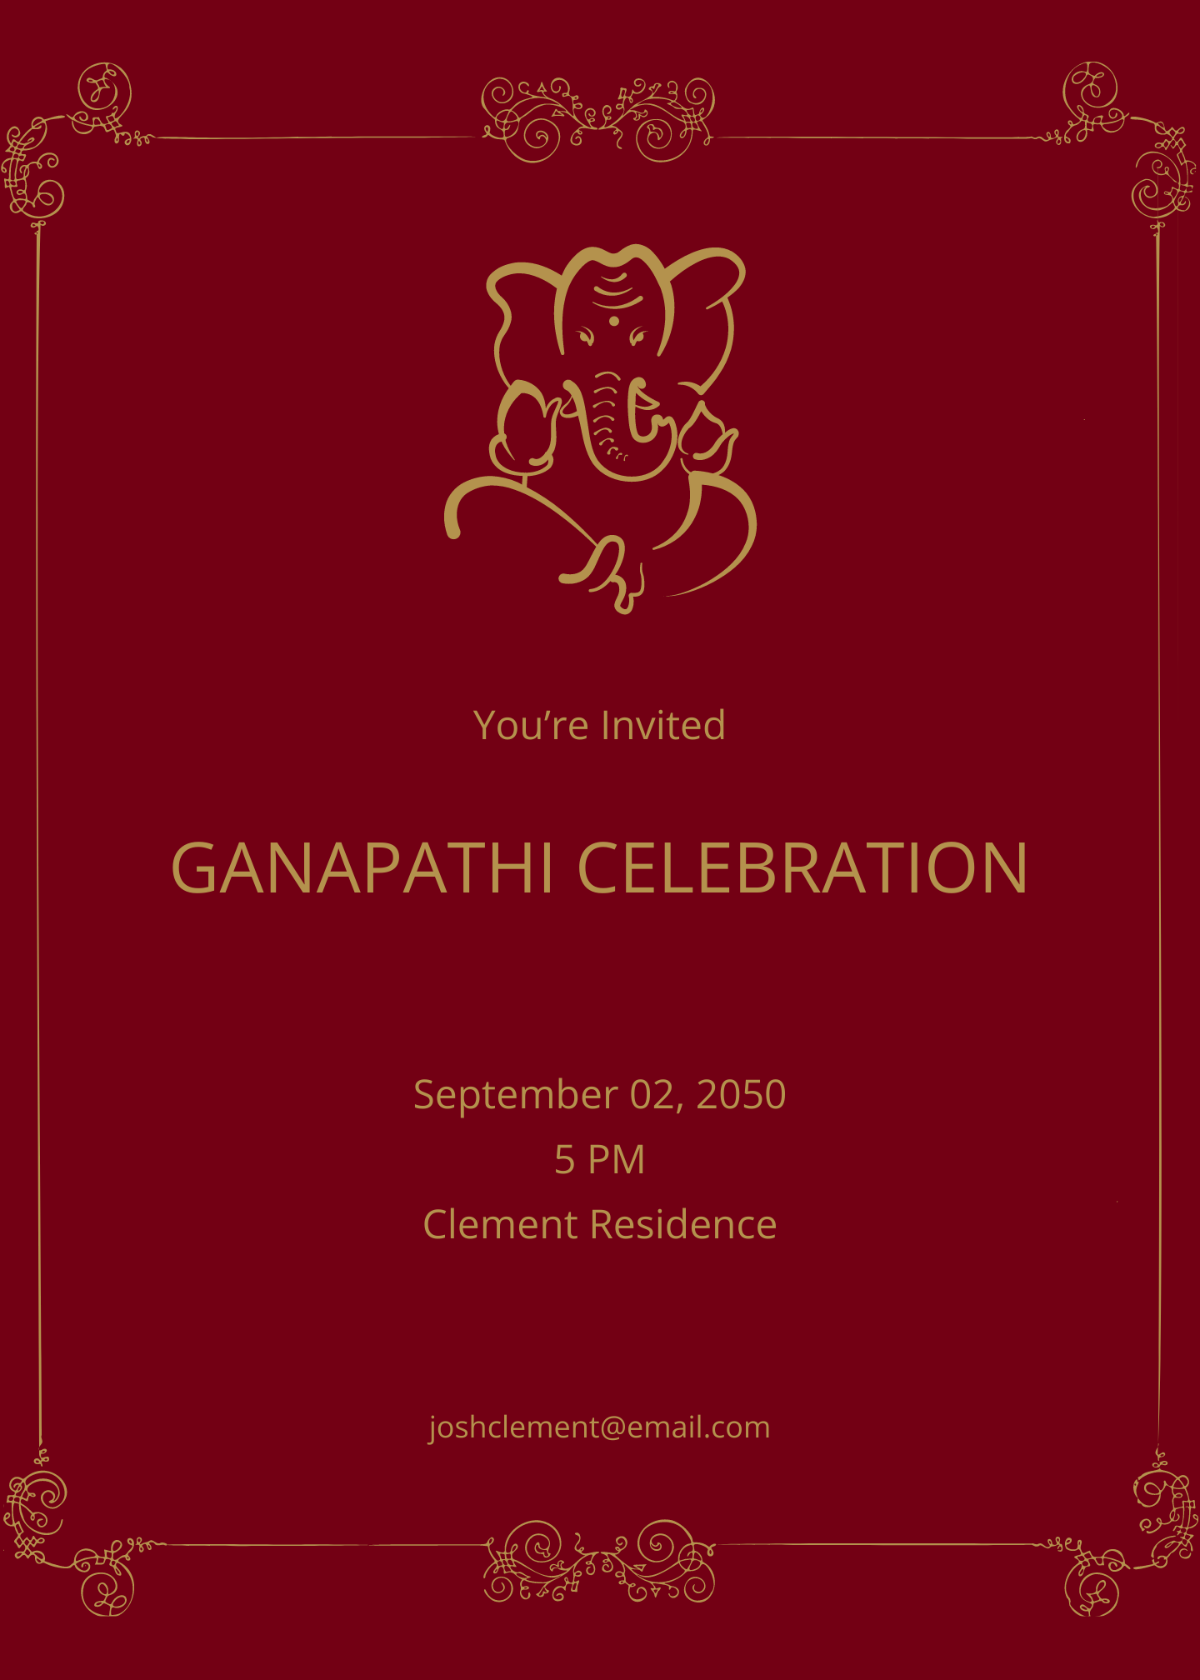 Ganapathi Invitation Card Template